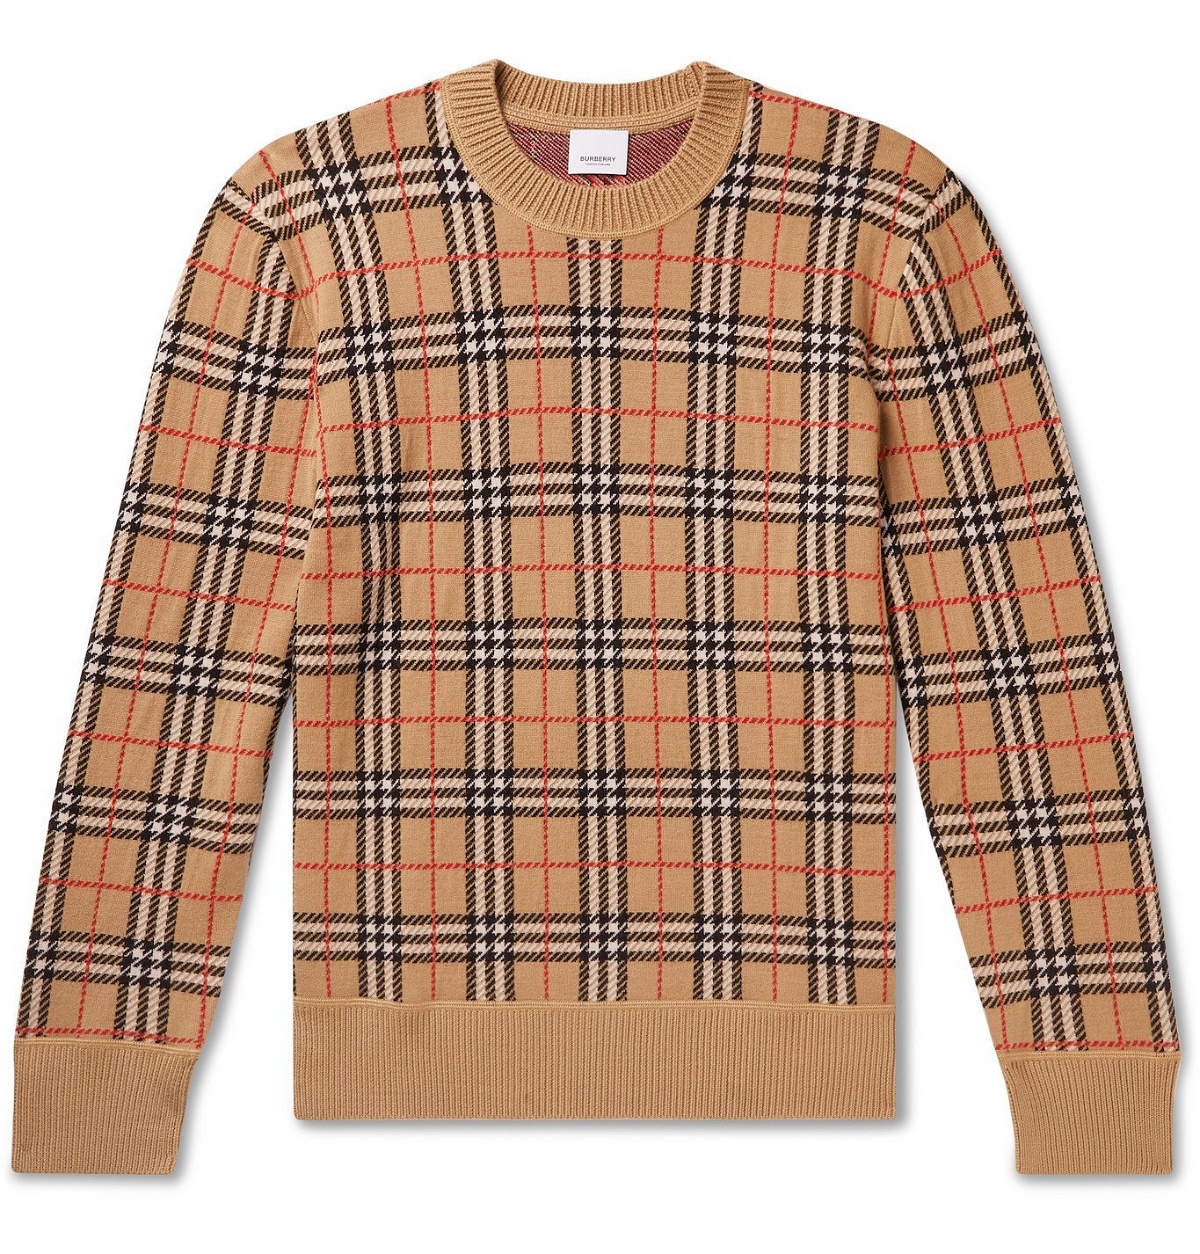 Burberry - Checked Merino Wool Sweater - Neutrals Burberry